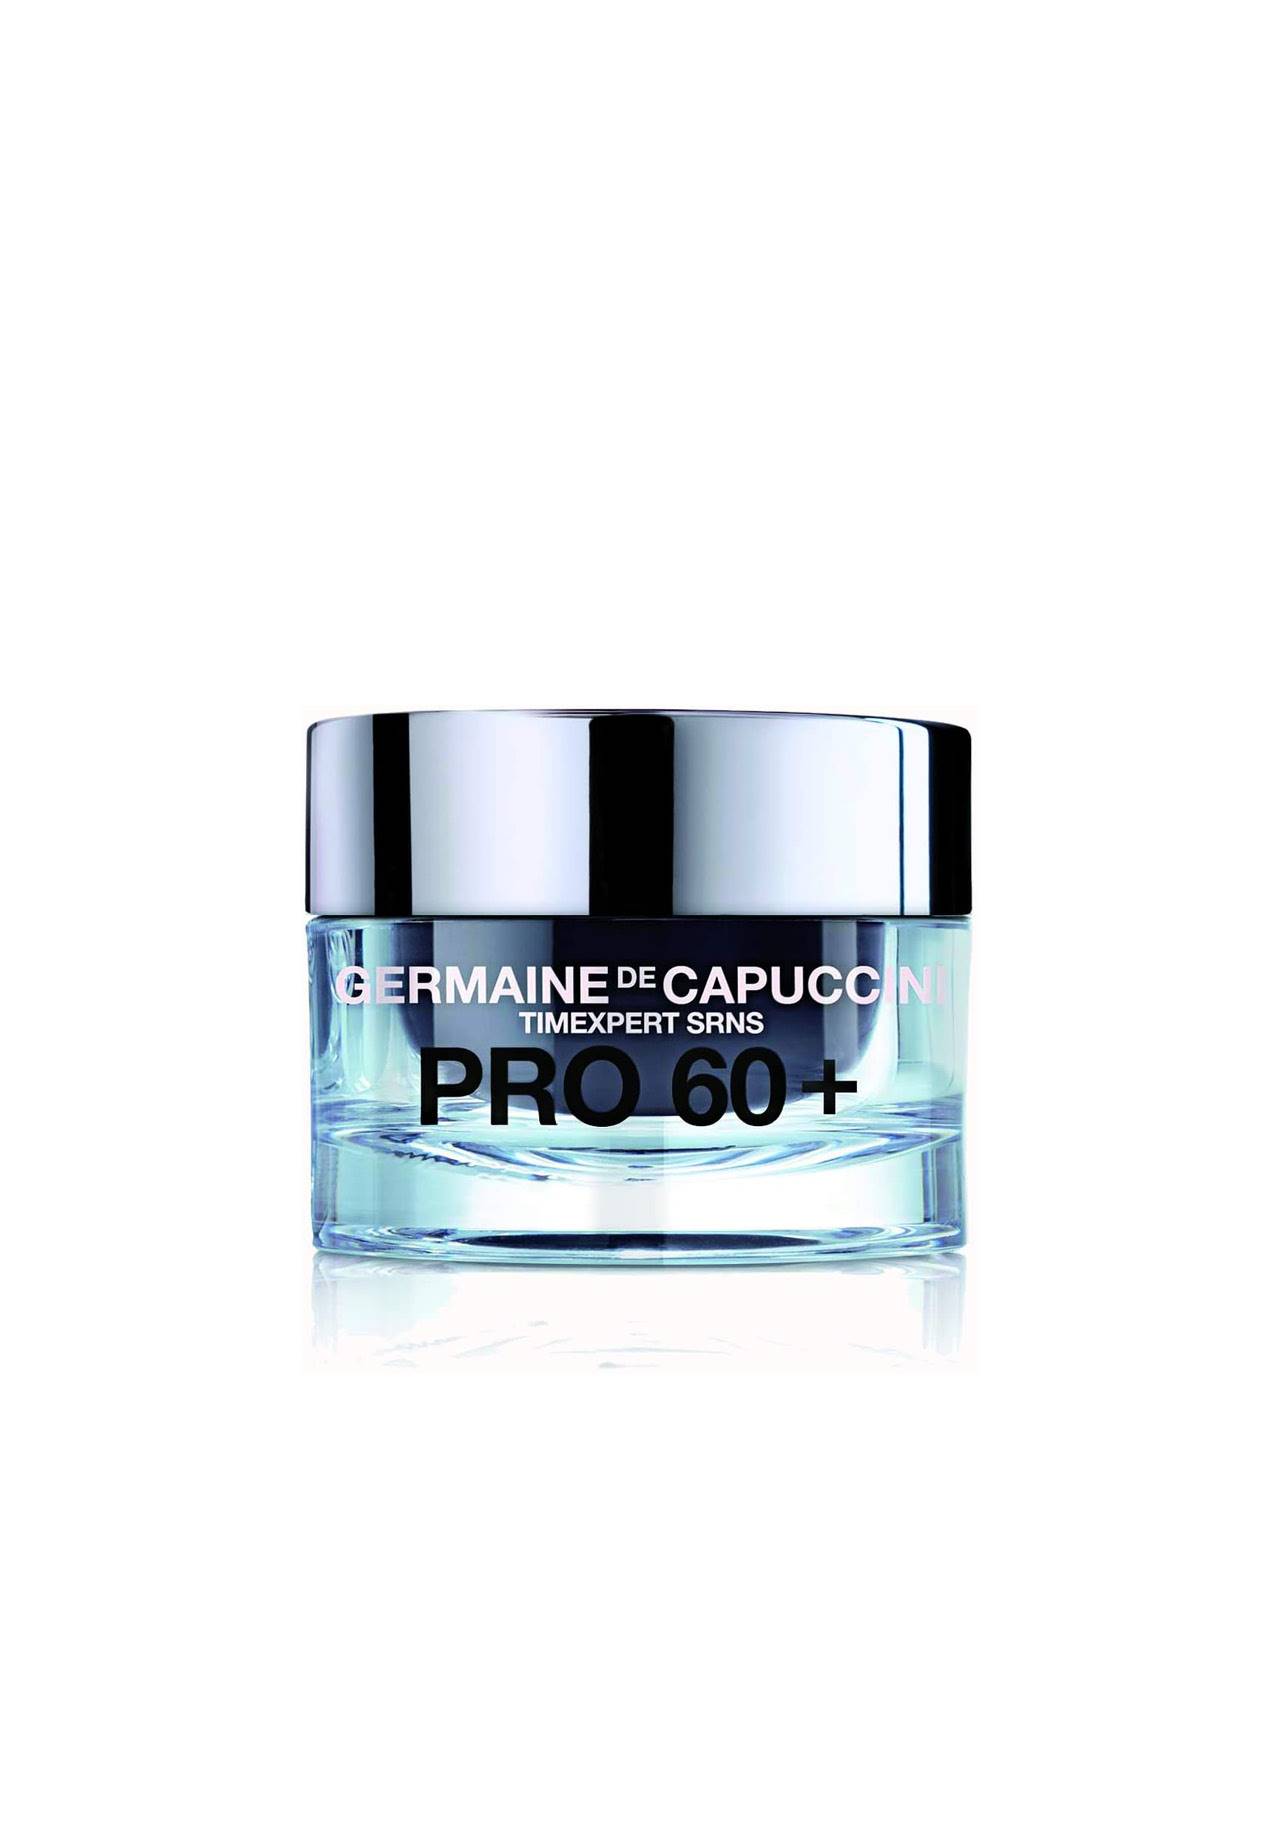 Cuidados de belleza para pieles secas 60+ Crema Timexpert SRNS Pro 60+ de Germaine de Capuccini